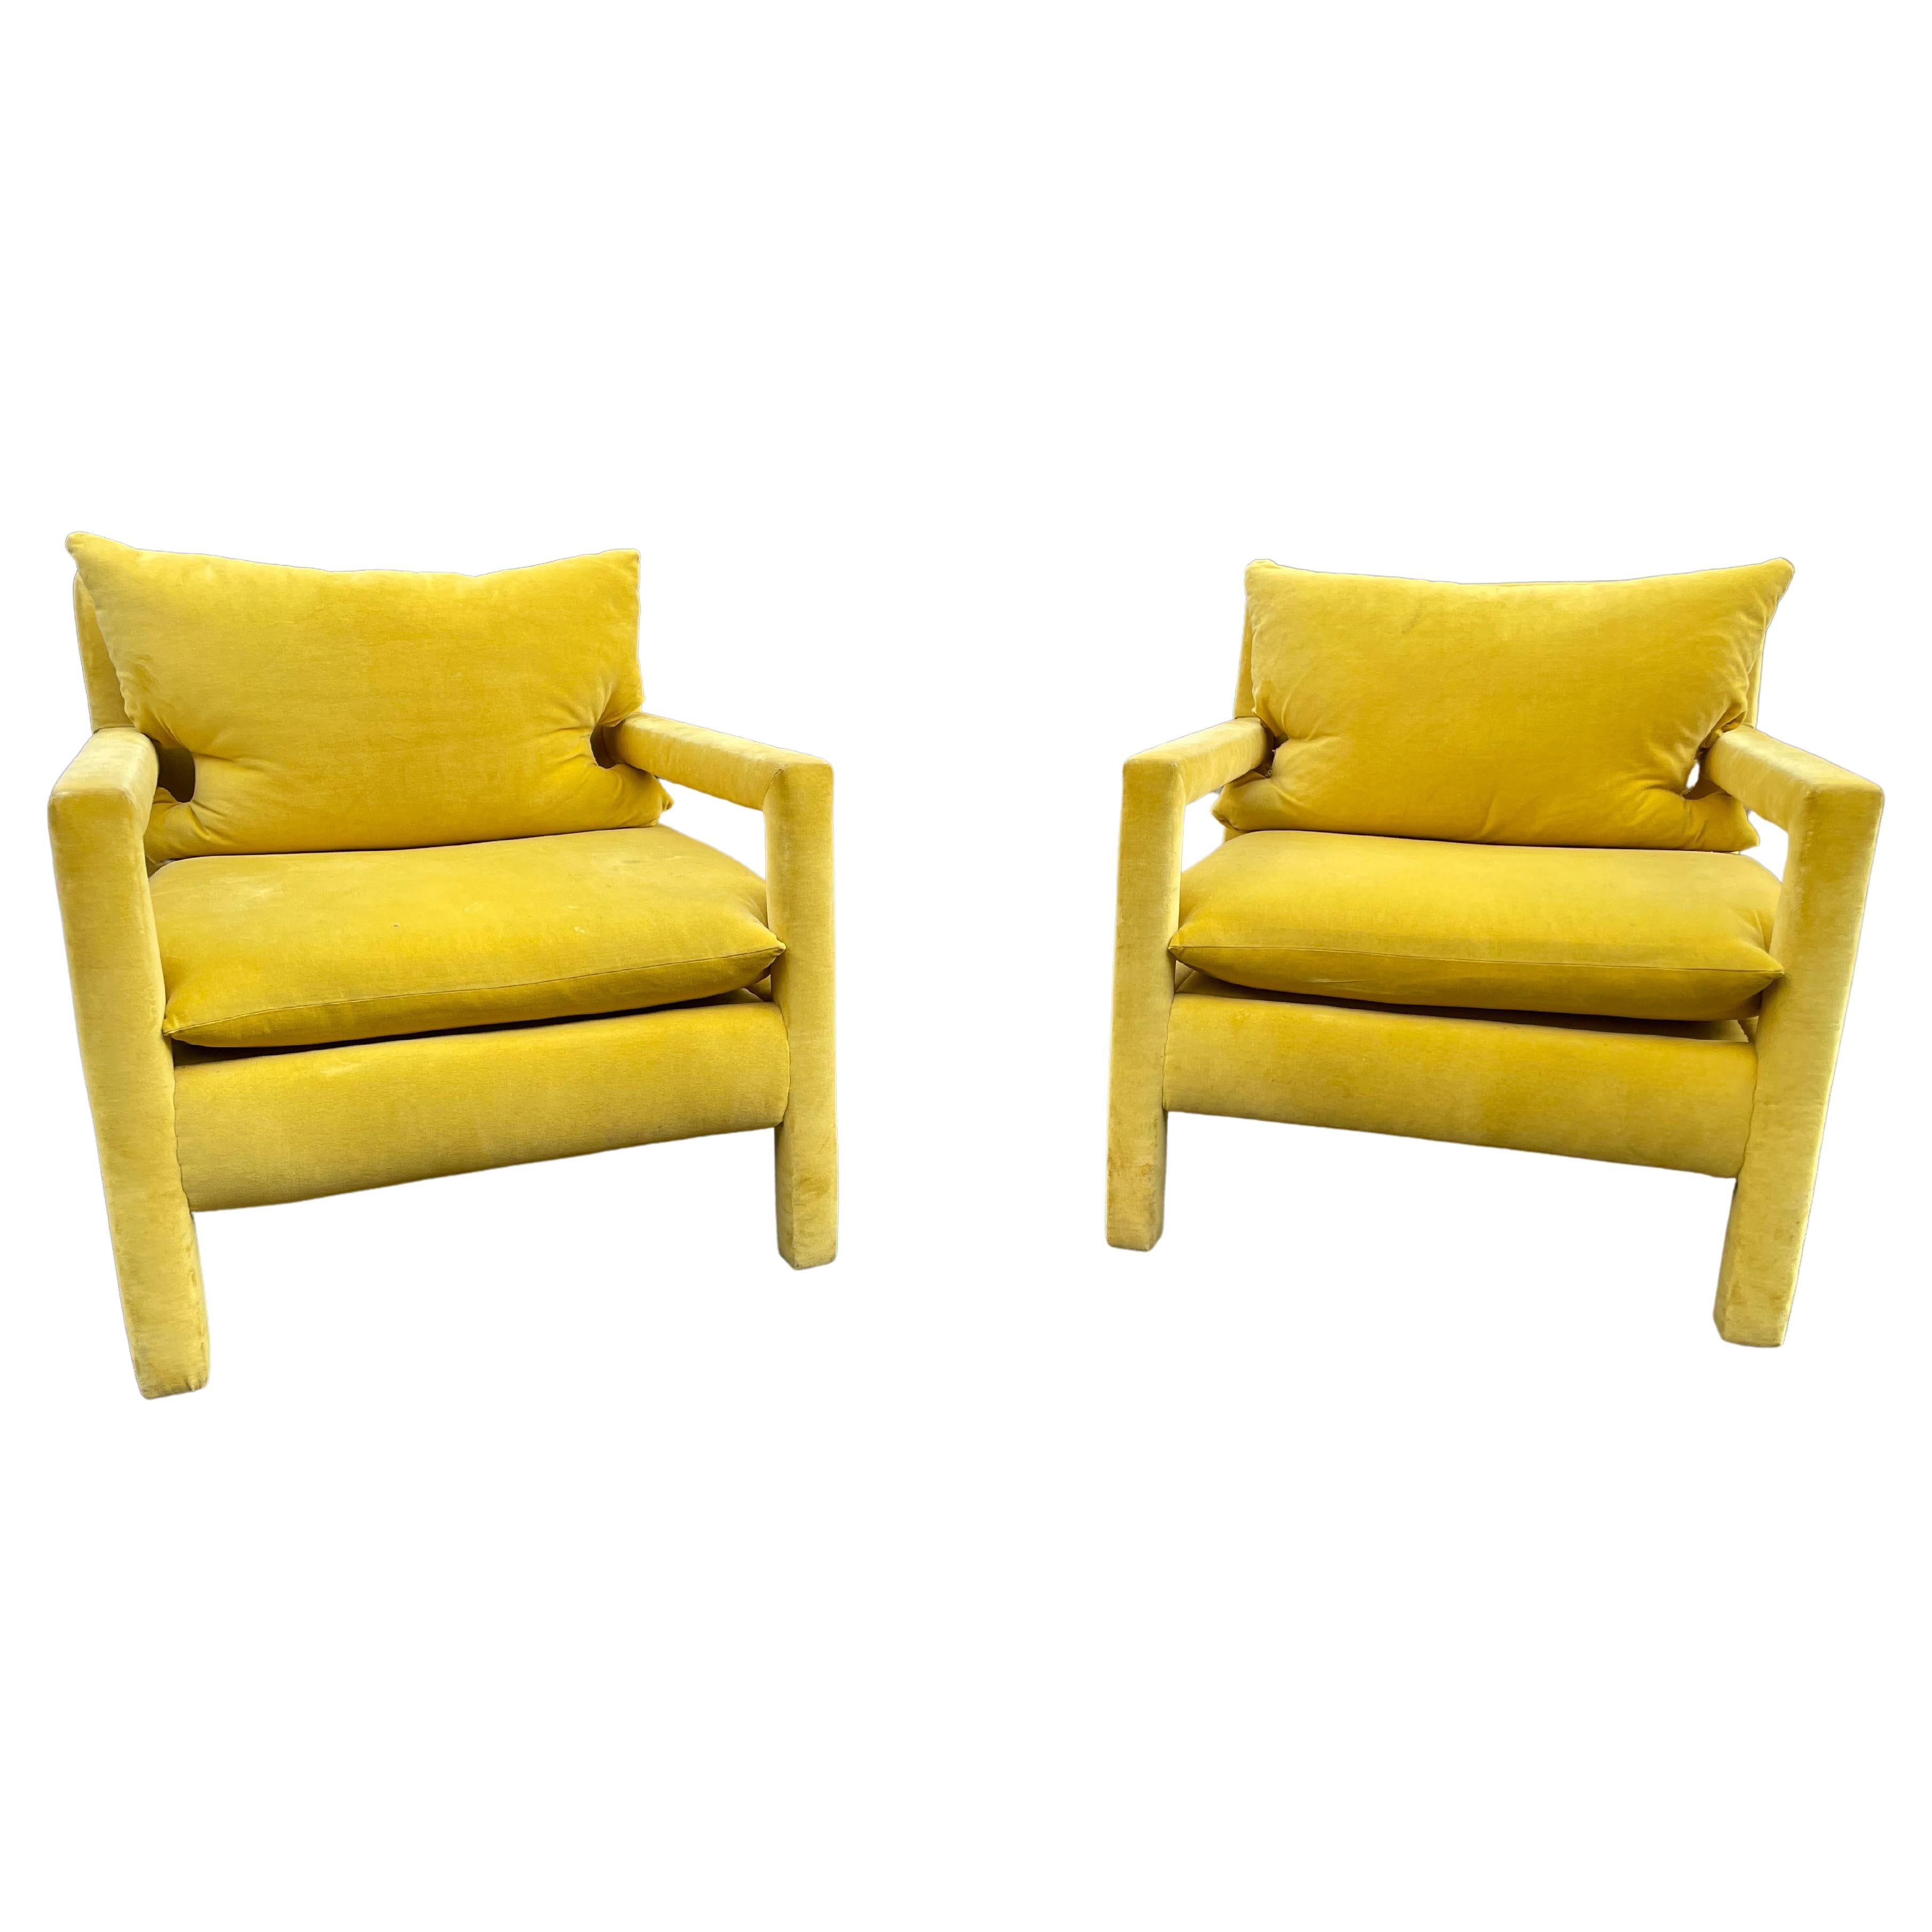 Mid-20th Century Yellow Velvet Milo Baughman Parsons Chairs, Pair. 1960s.